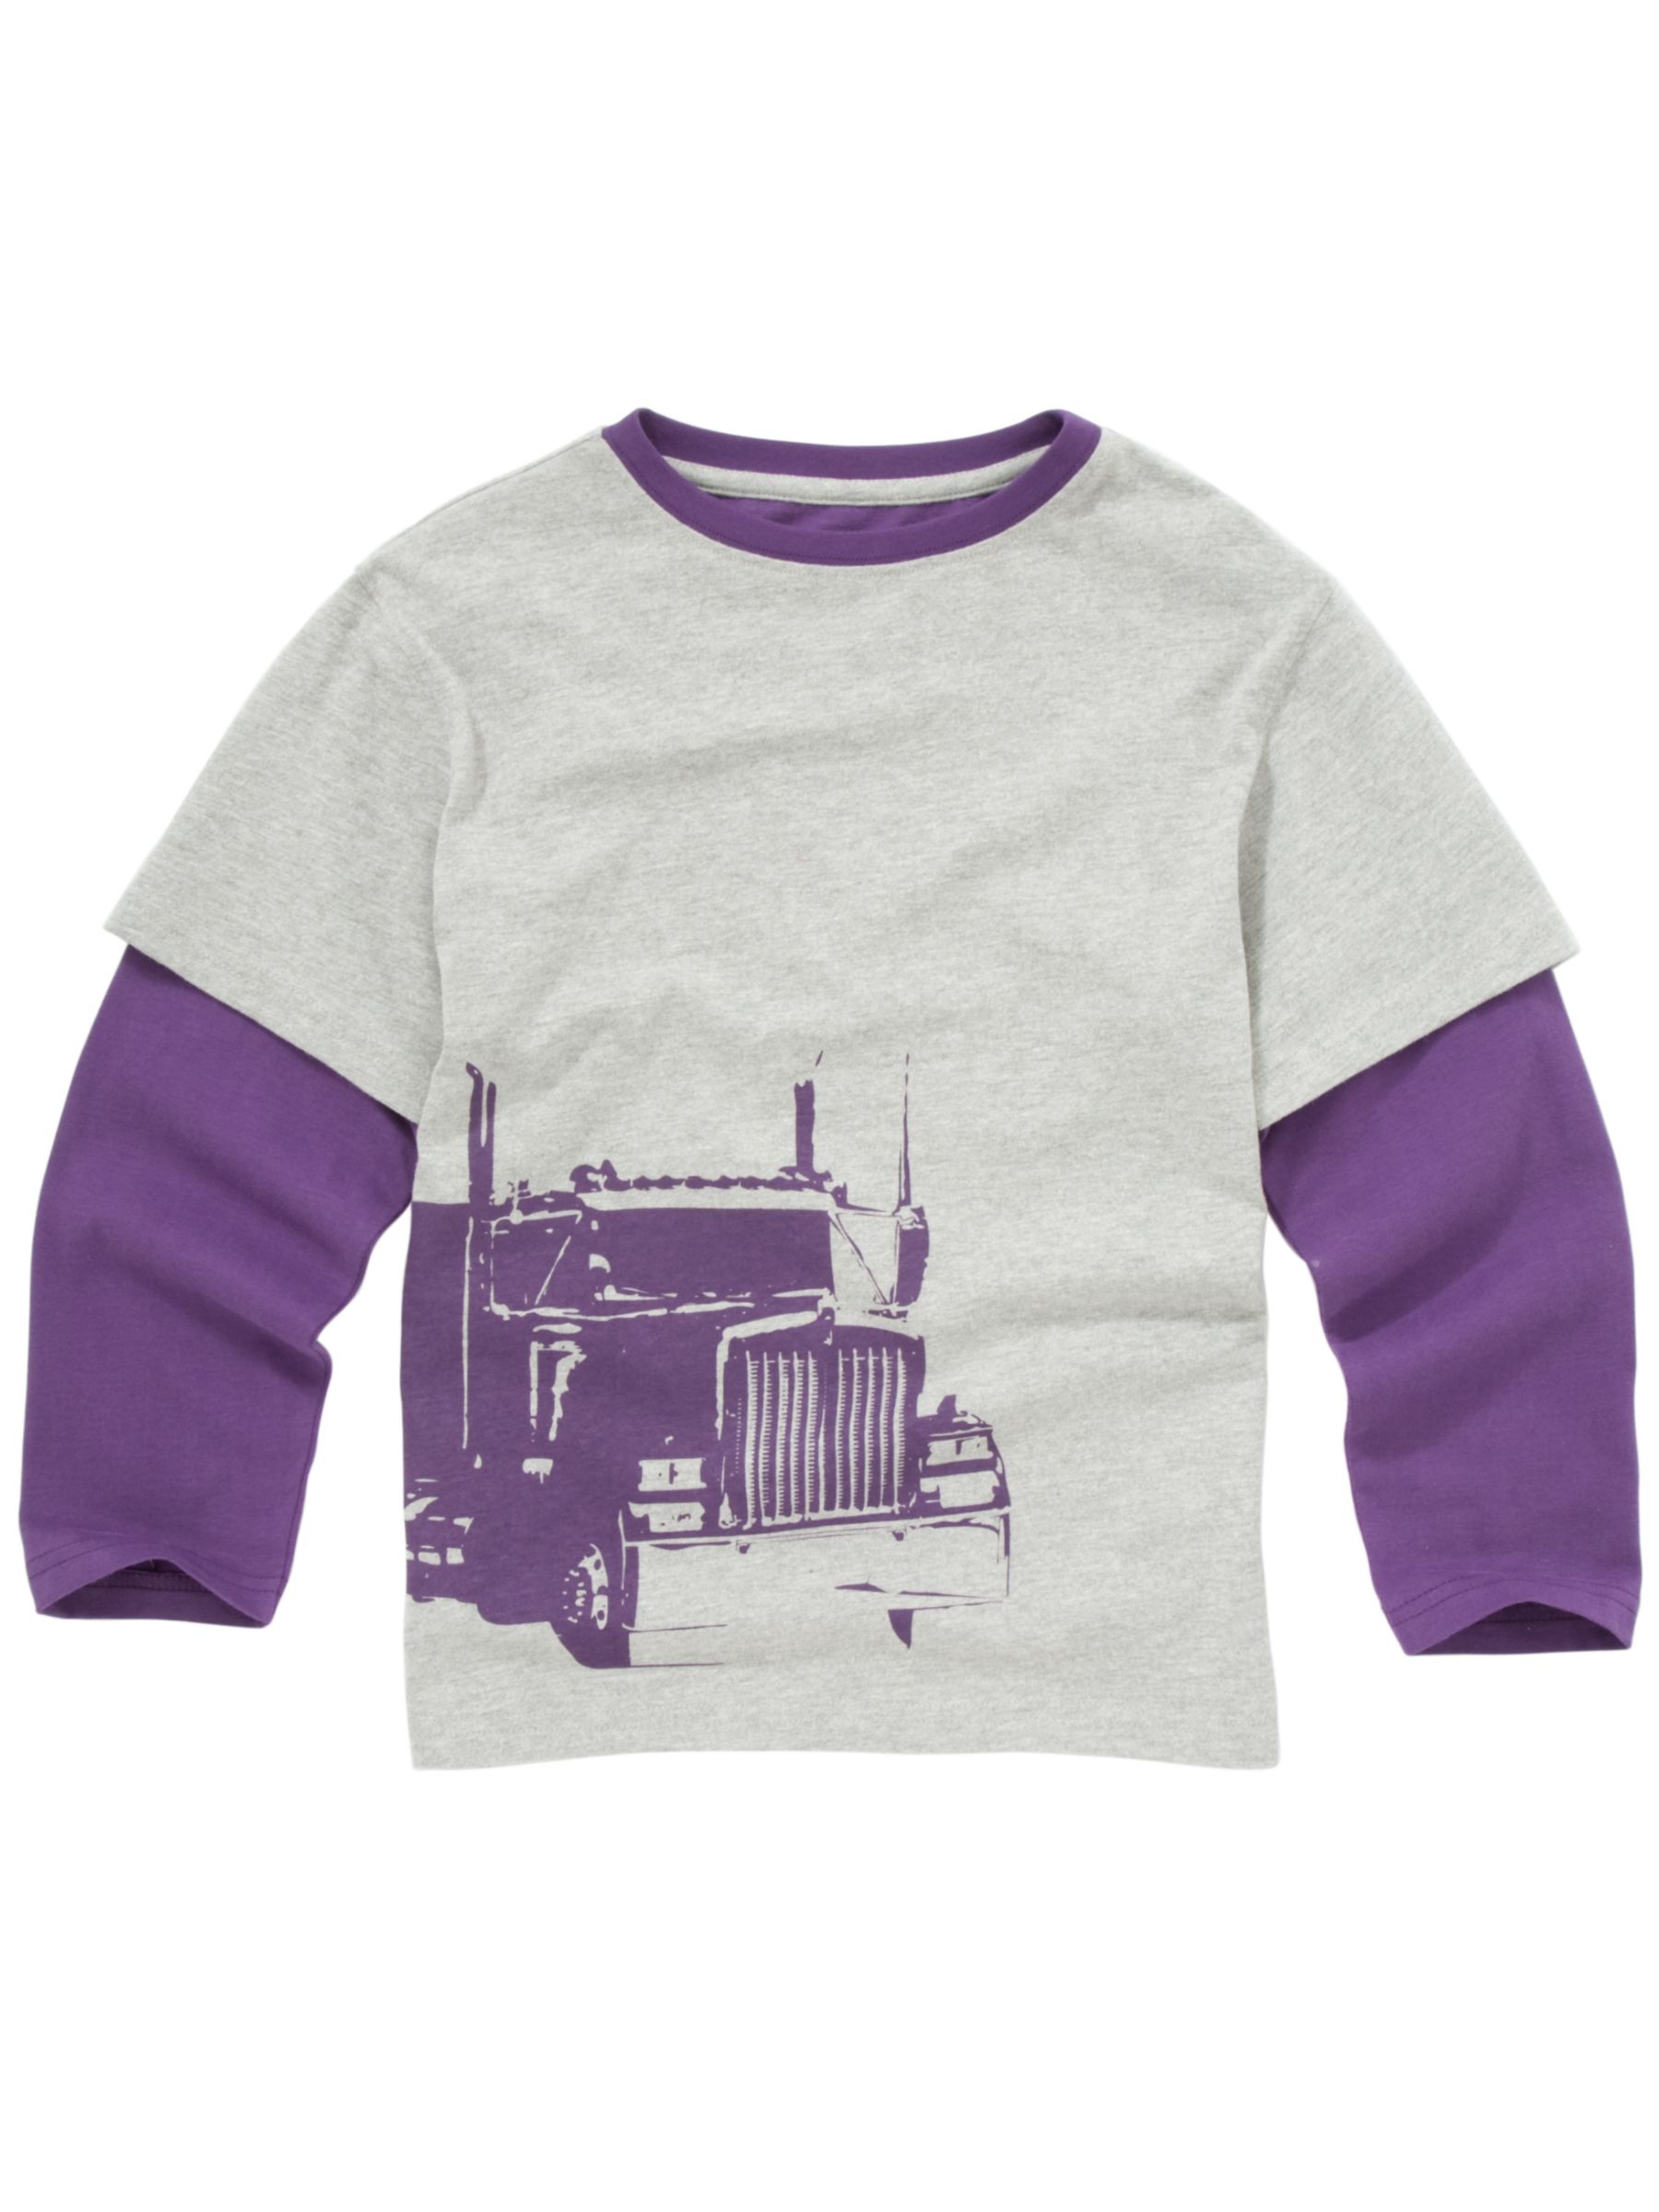 Truck Layered T-Shirt, Grey/Purple